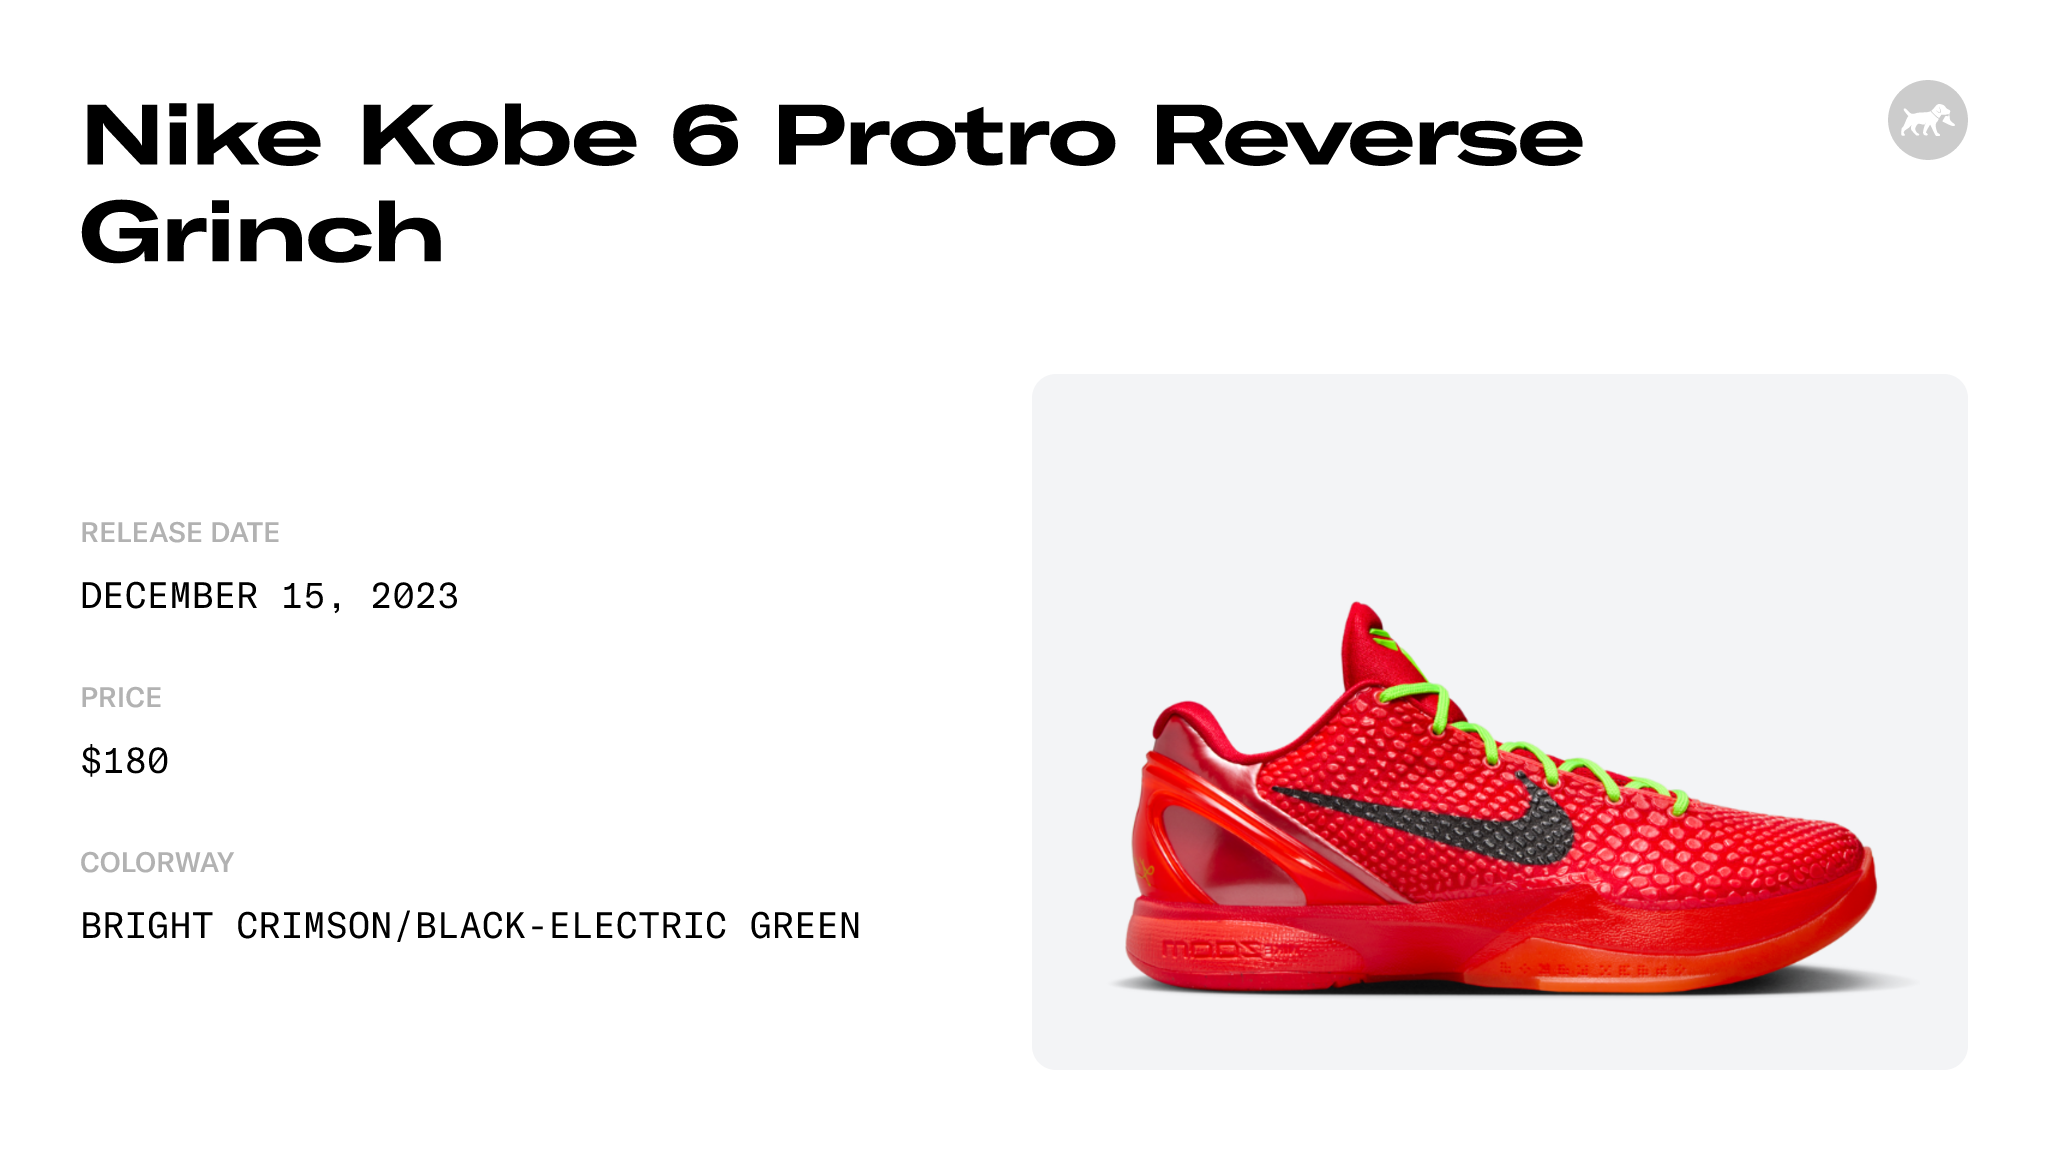 Nike Kobe 6 Protro Reverse Grinch FV4921-600 Release